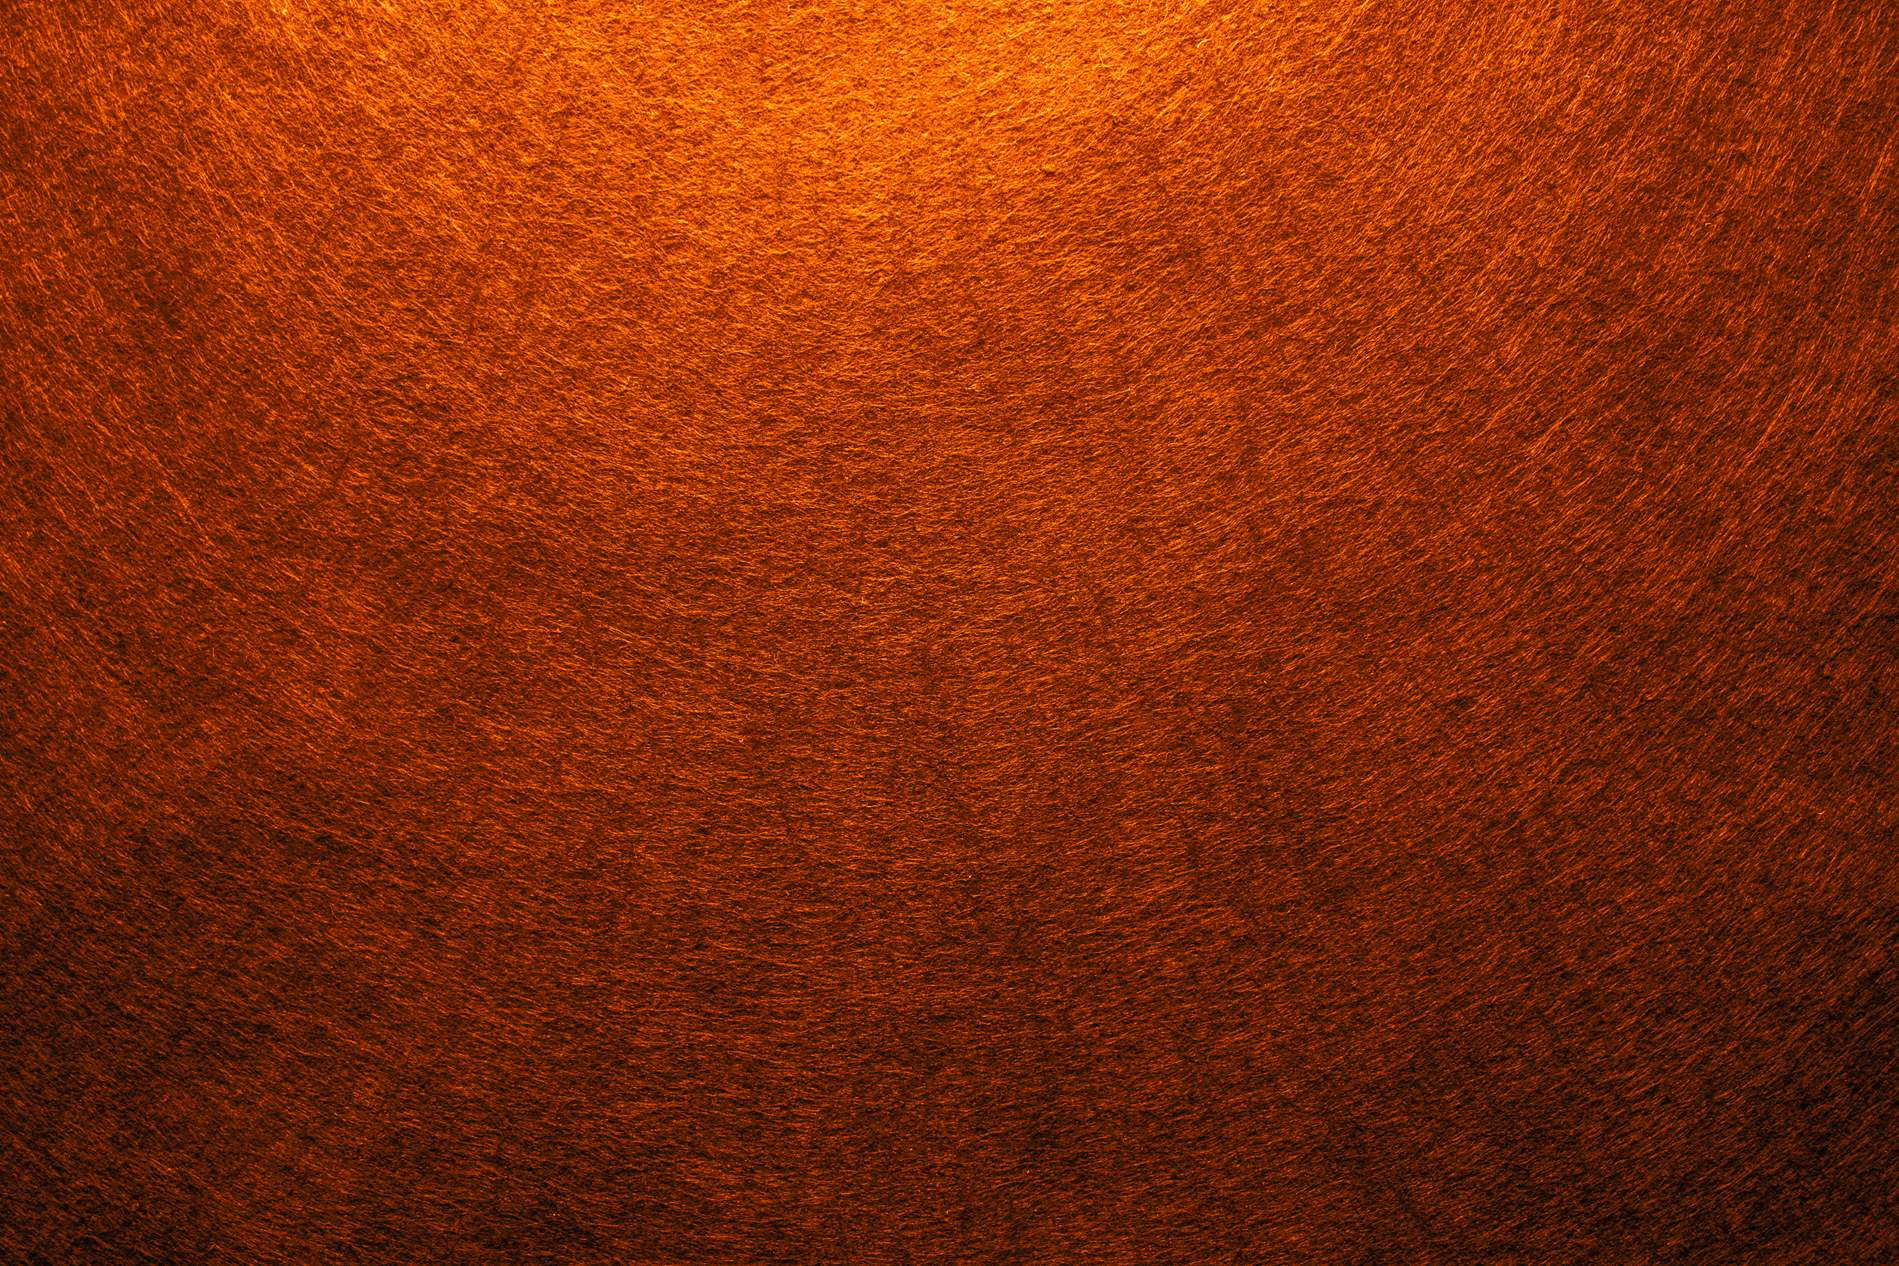 papel tapiz con textura naranja,naranja,rojo,marrón,amarillo,color caramelo